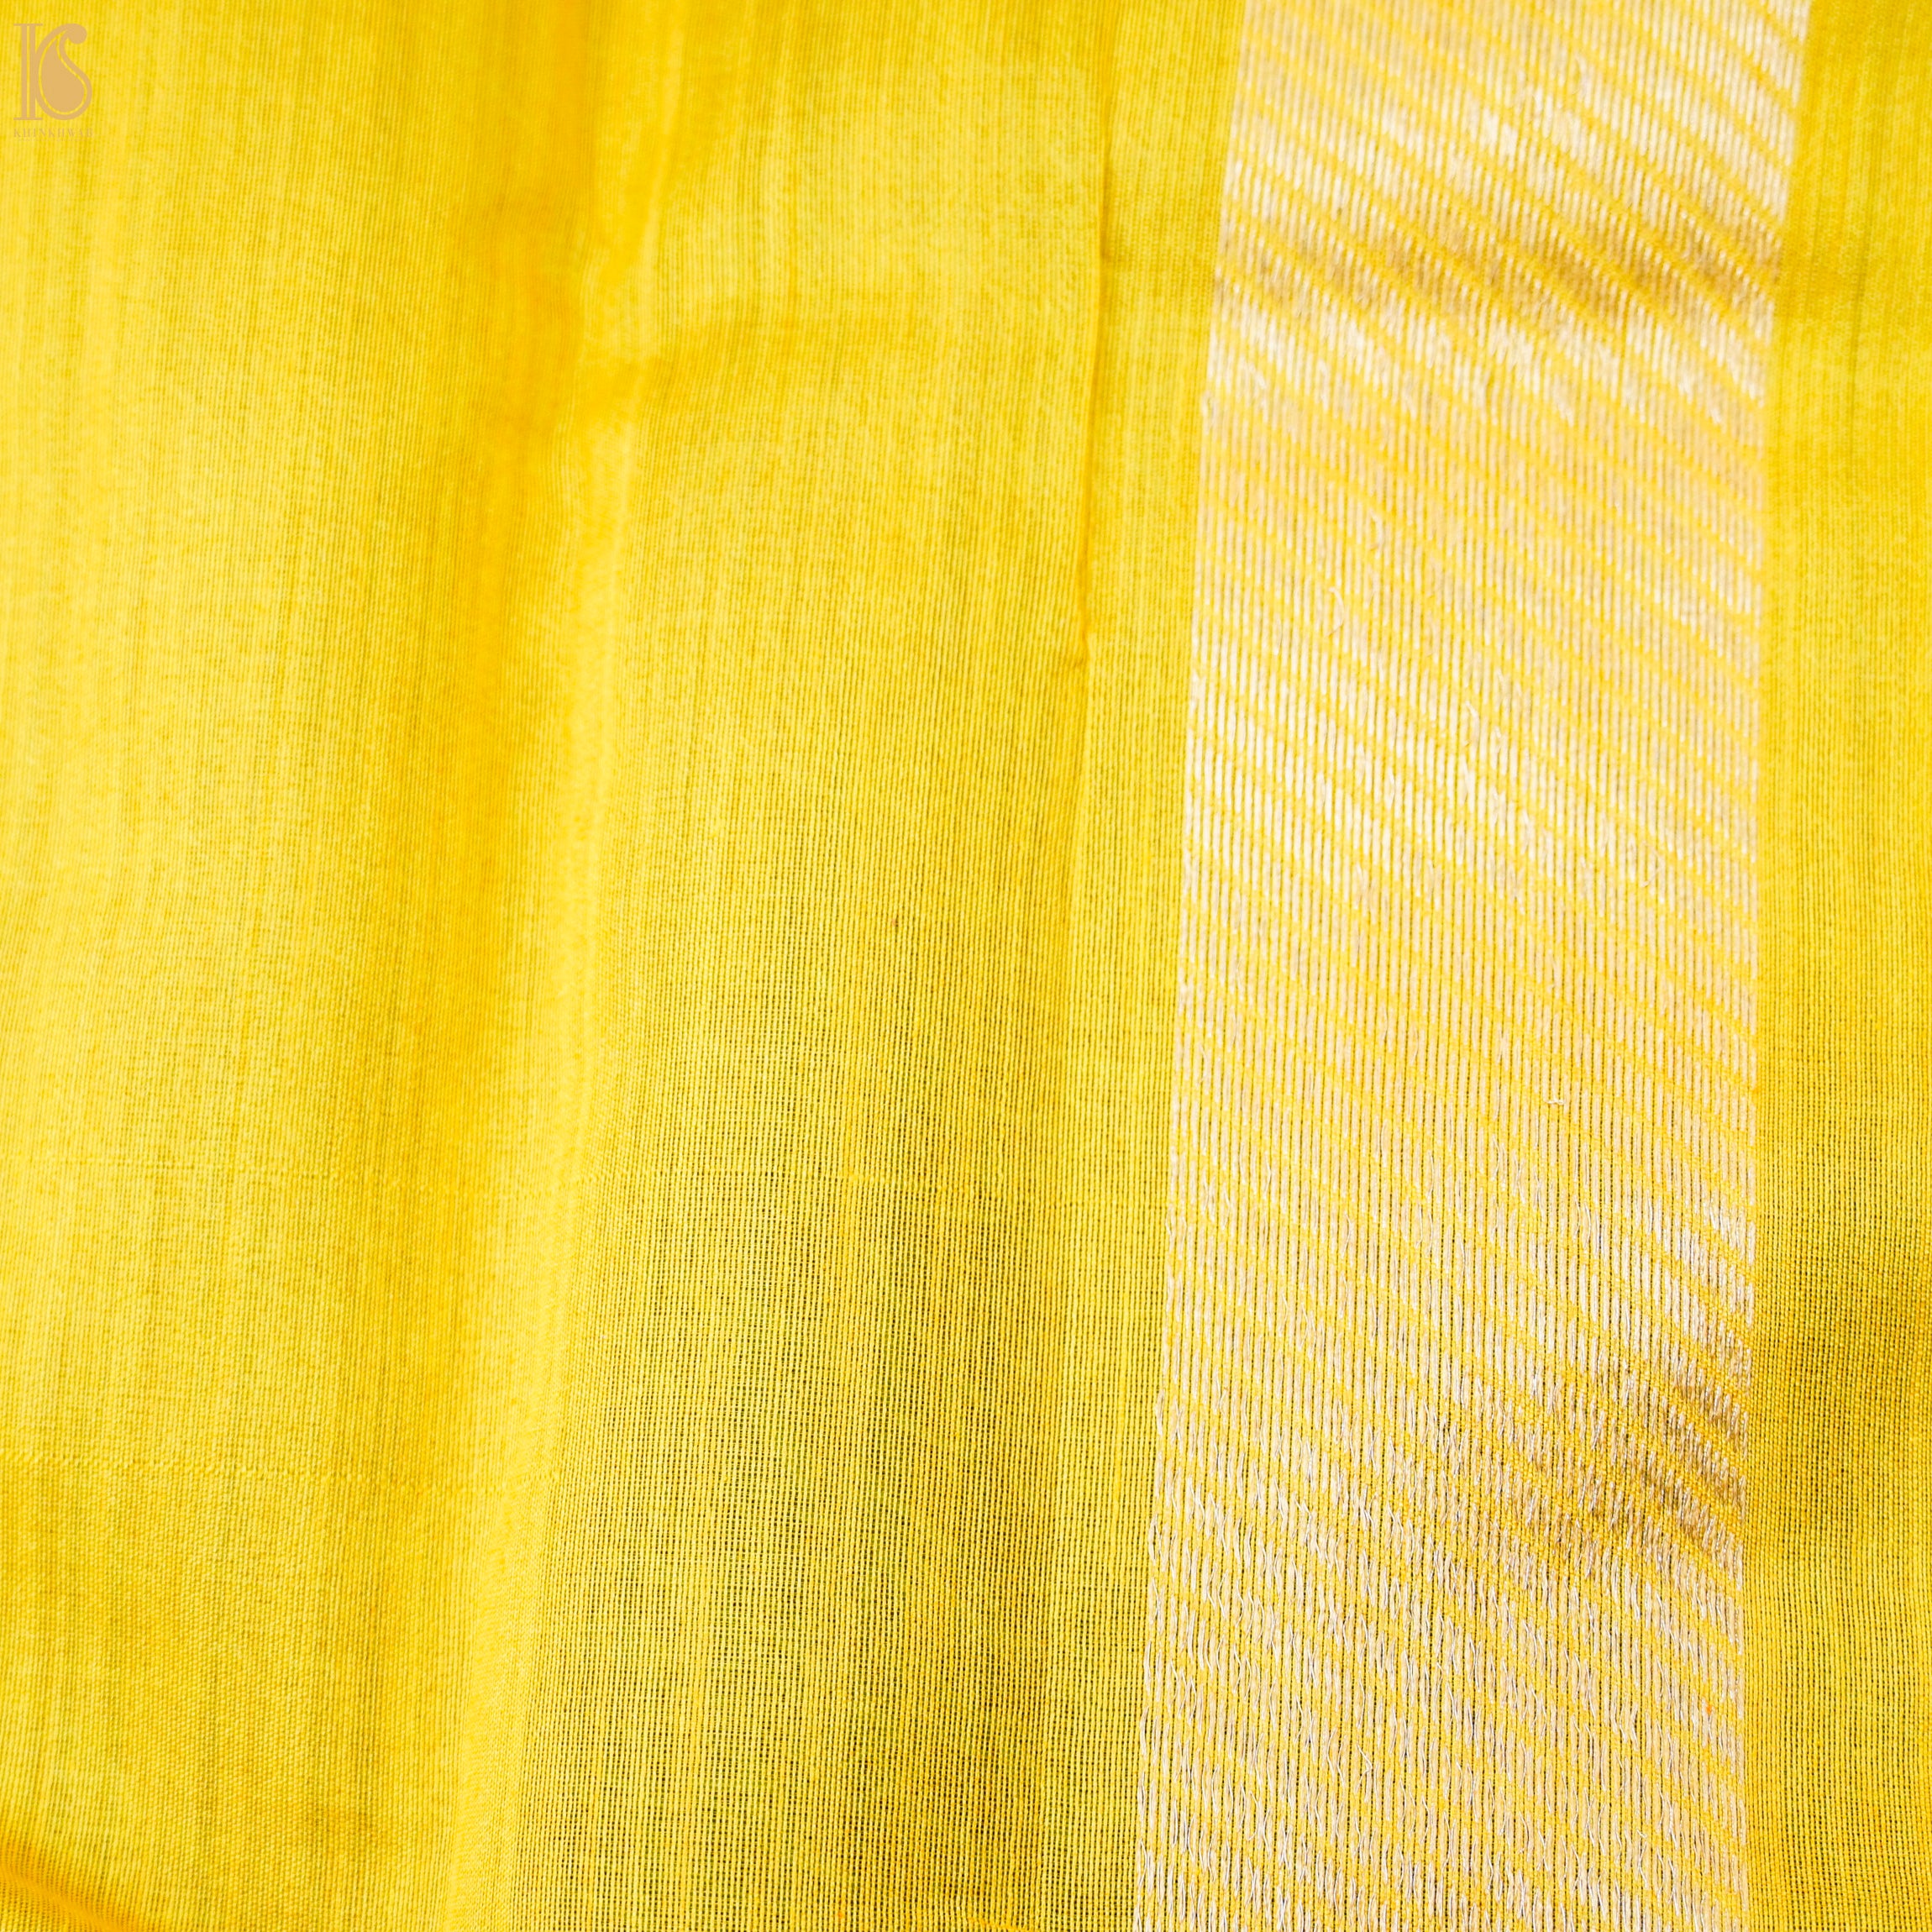 Red &amp; Yellow Pure Linen Handloom Banarasi Saree - Khinkhwab